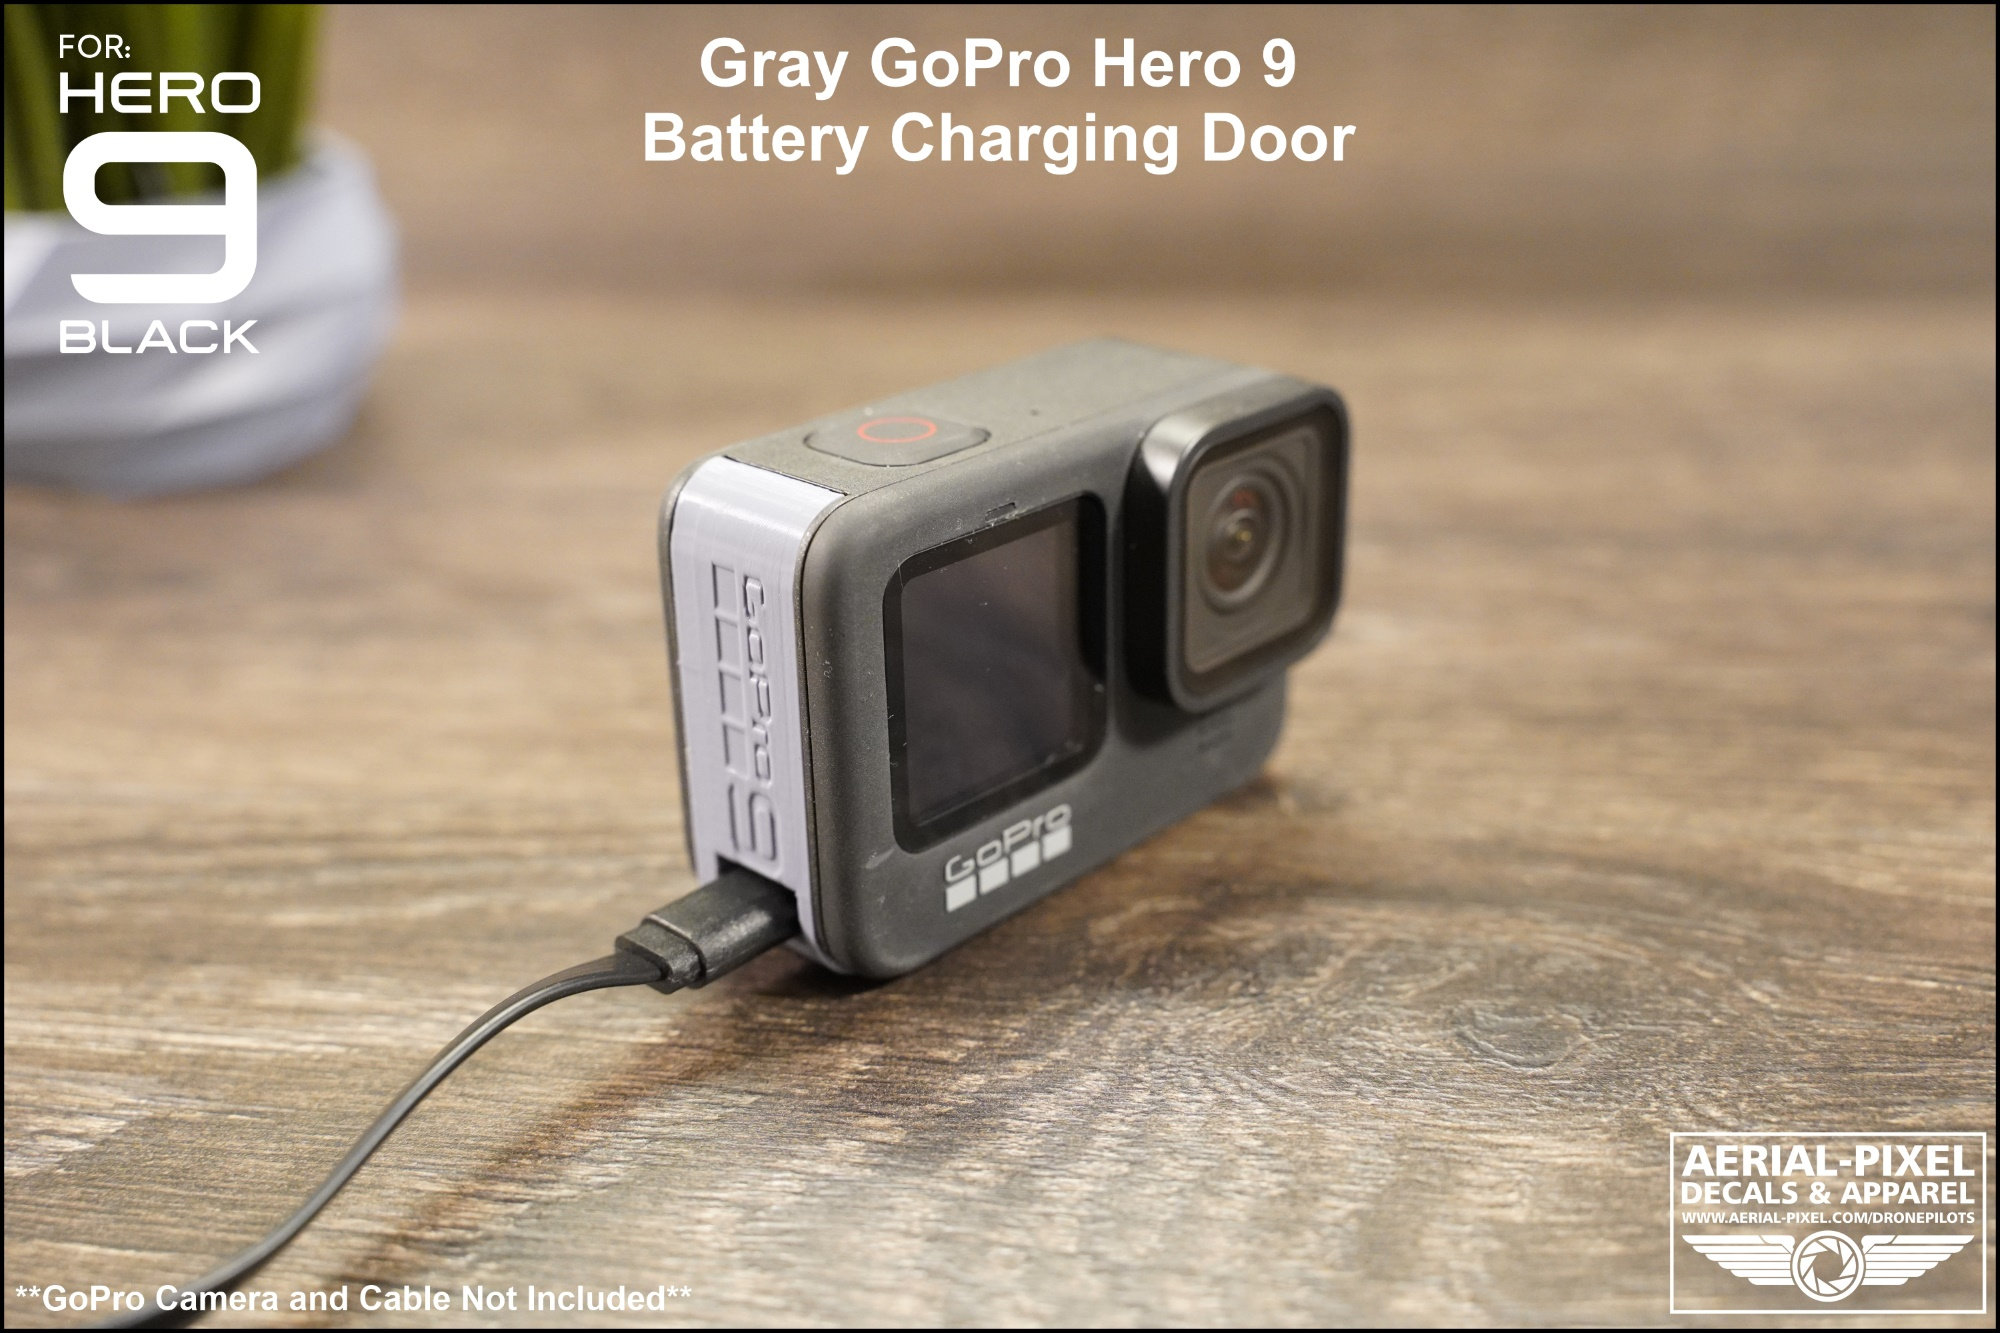 Gopro Hero 10 Protector - Best Price in Singapore - Dec 2023